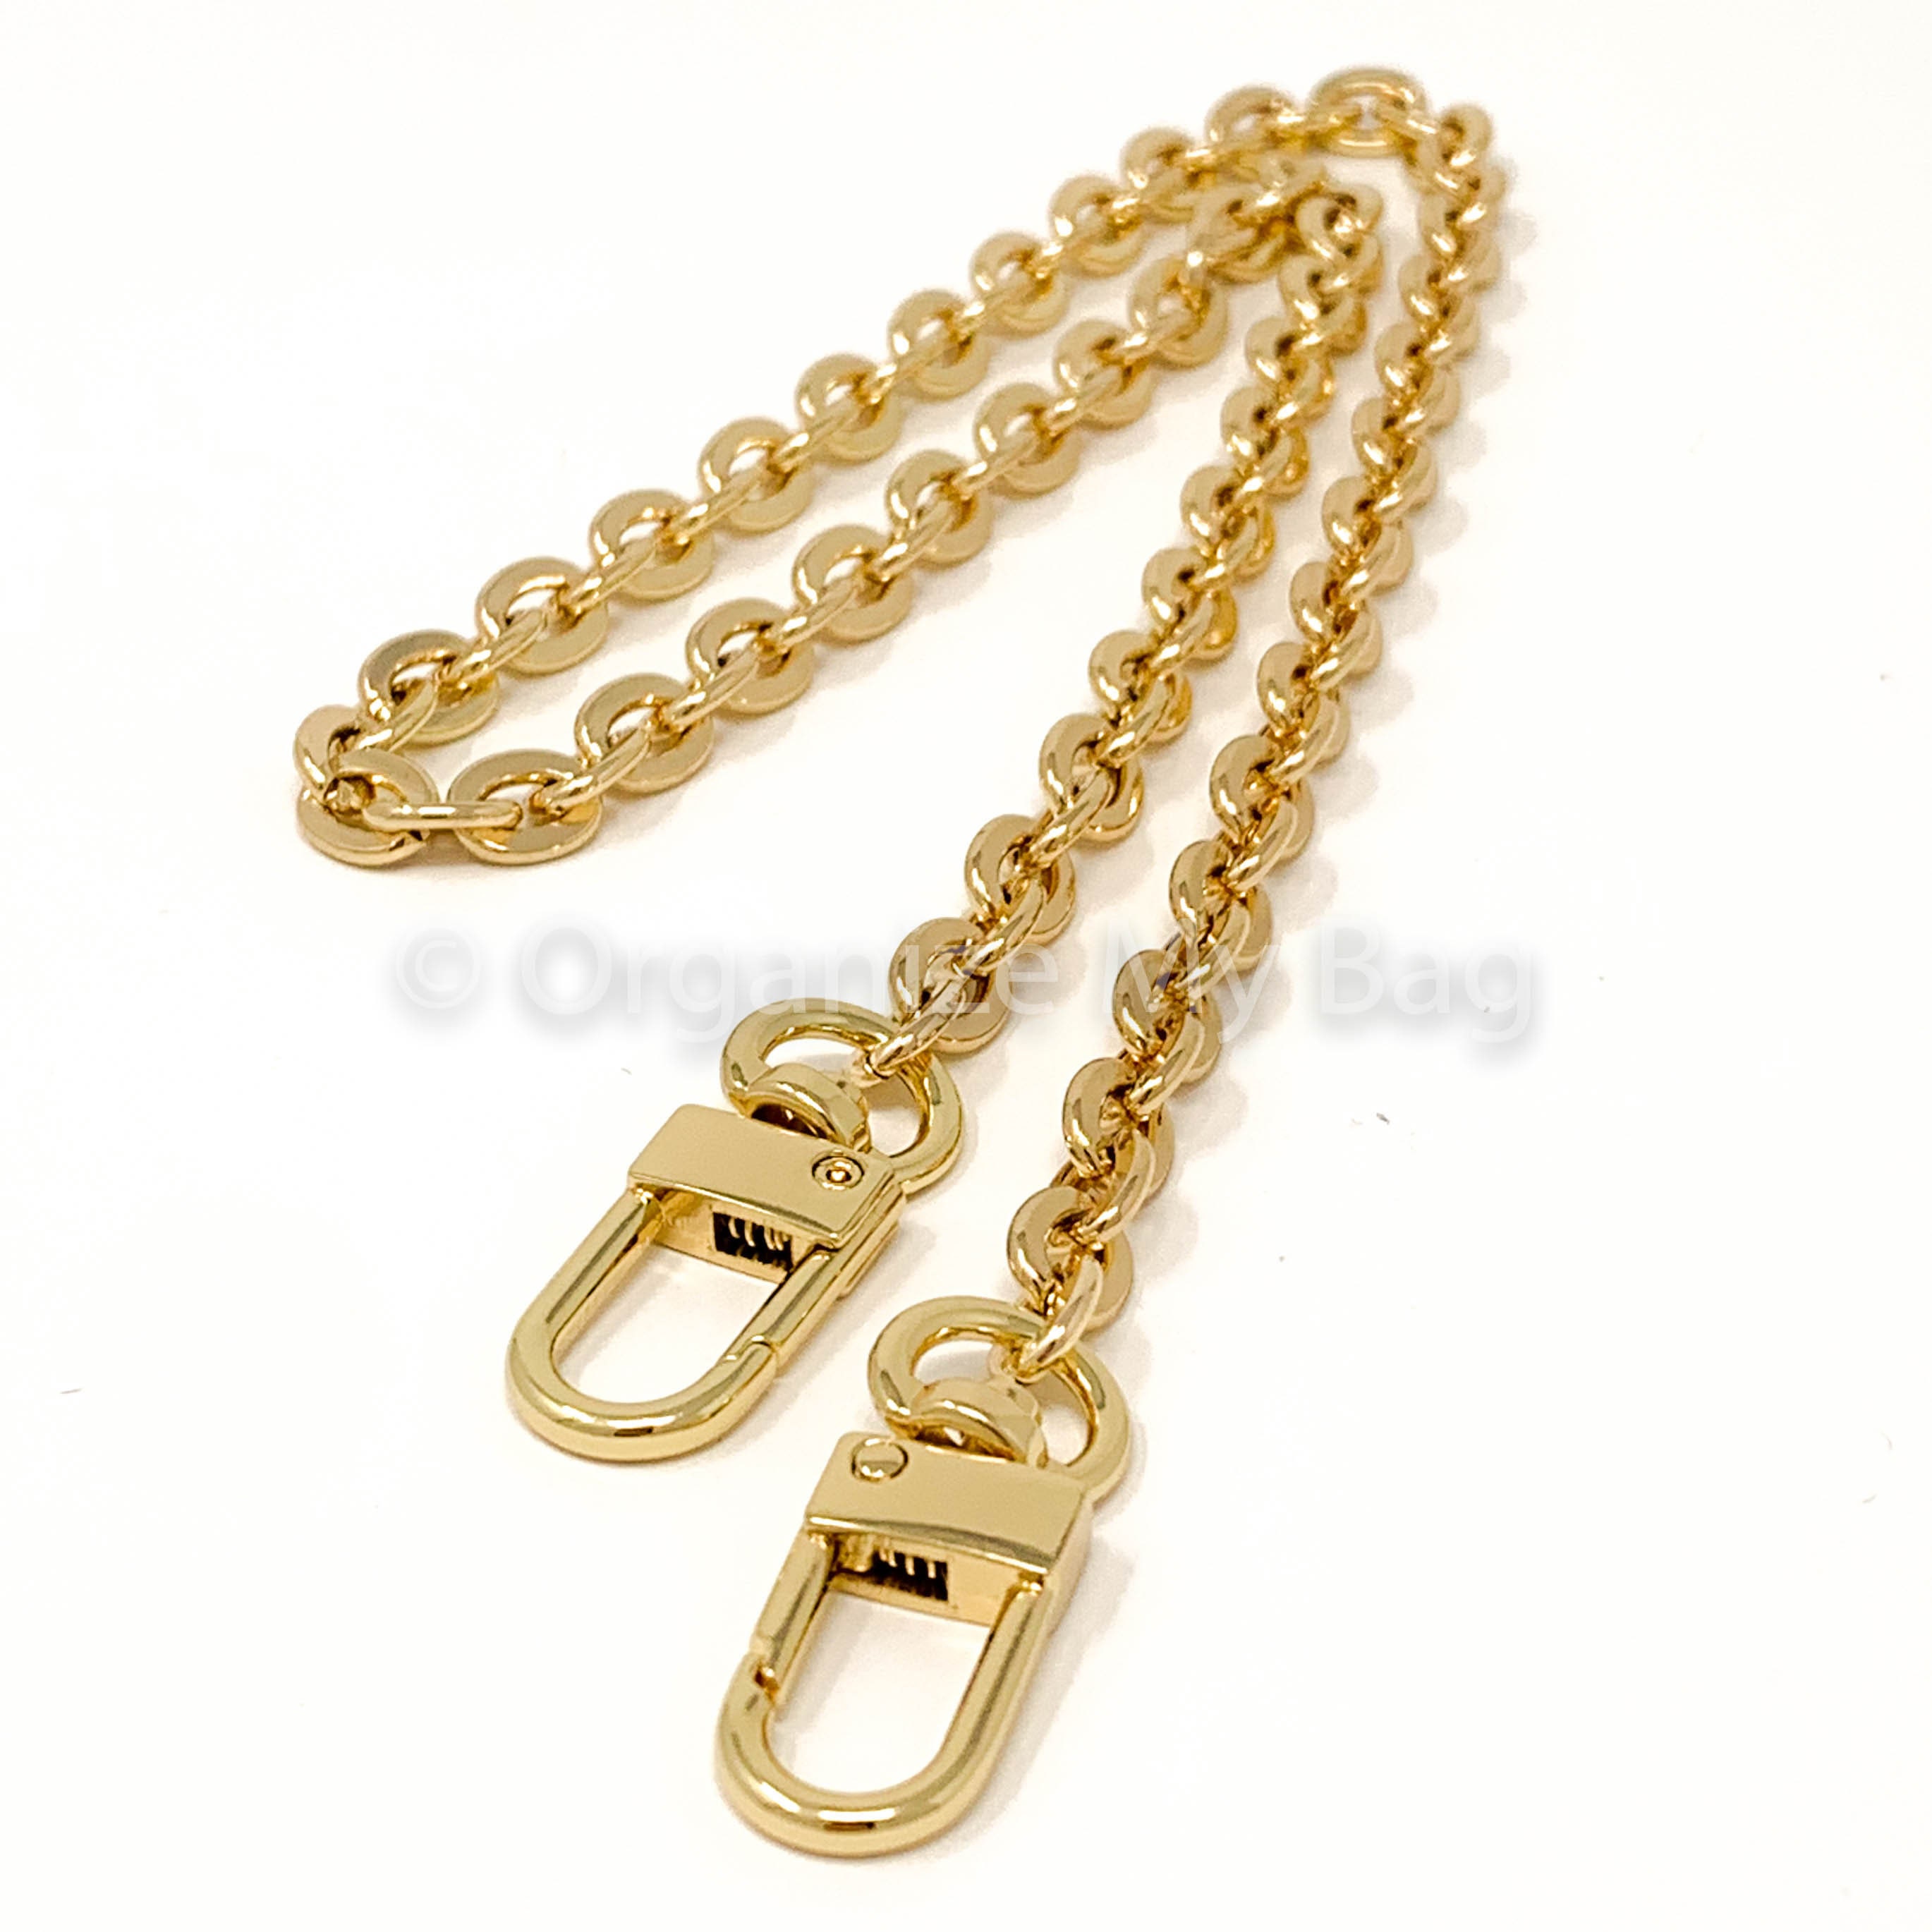 Next Fashion Oval Purse Chain Flat Gold Light Weight Crossbody Shoulder Strap Polished - (8 / 20cm)